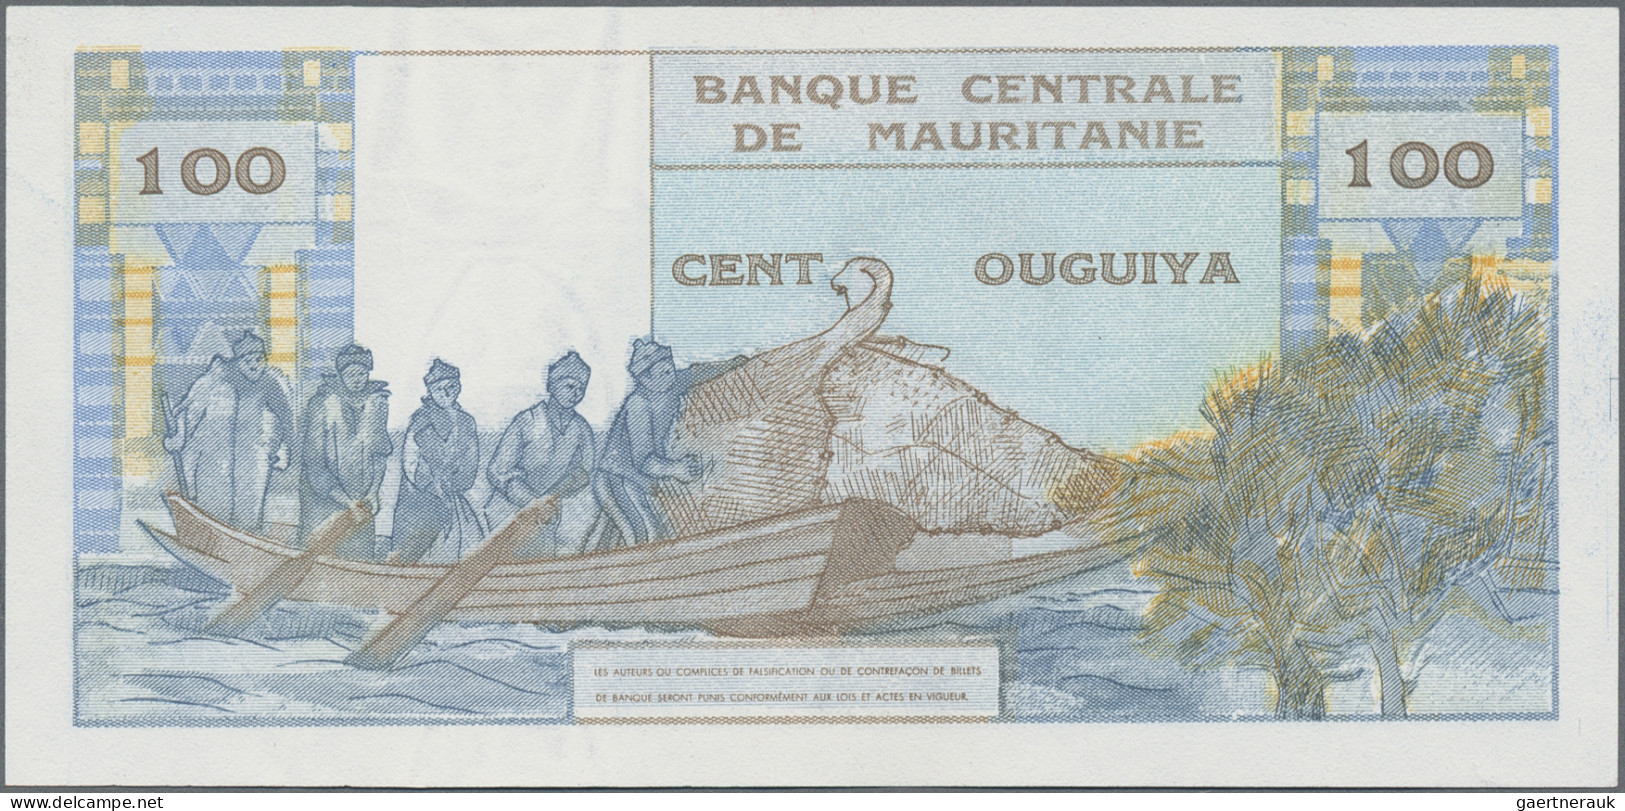 Mauritania: Banque Centrale De Mauritanie, 100 Ouguiya 1973, P.1 In Perfect UNC - Mauritania